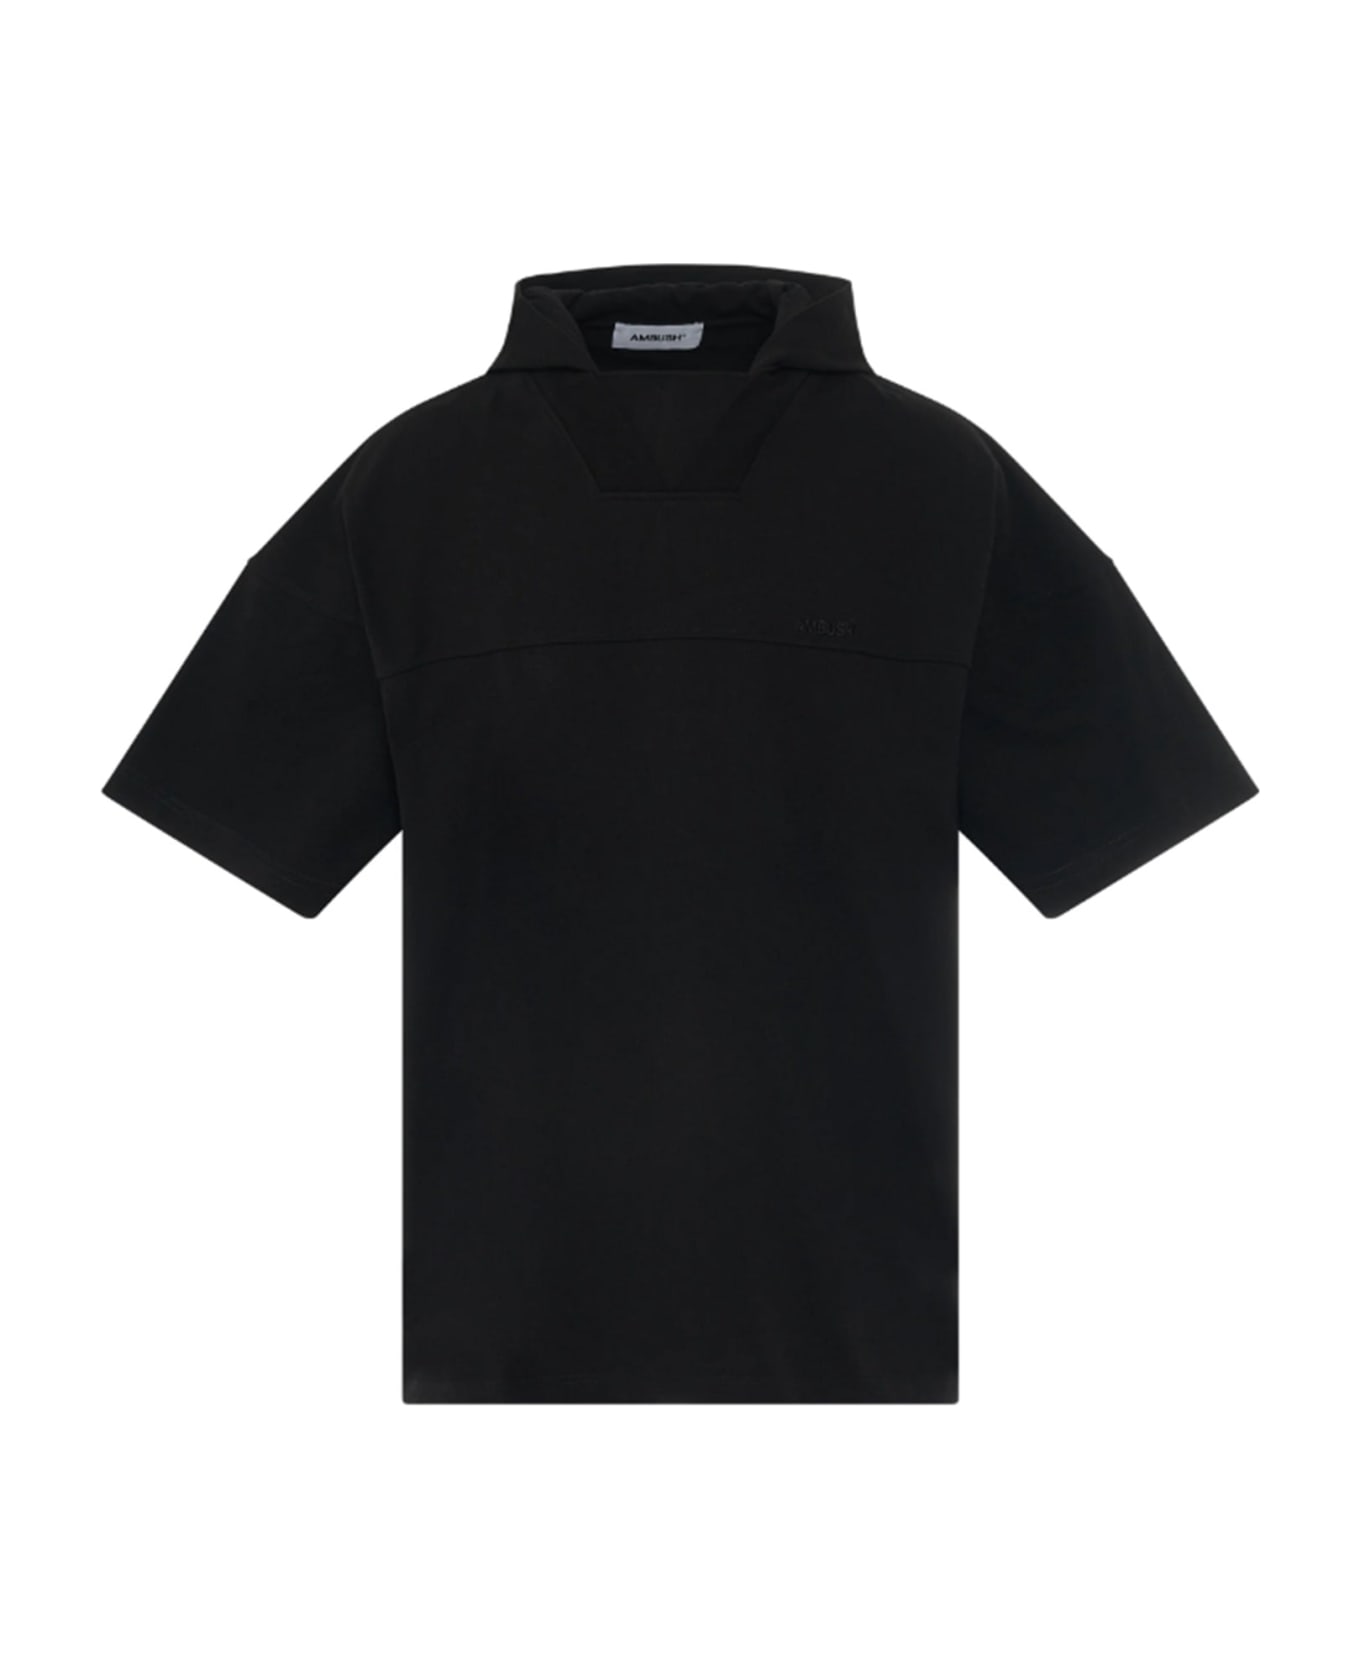 AMBUSH Short Sleeves Sweatshirt - Black